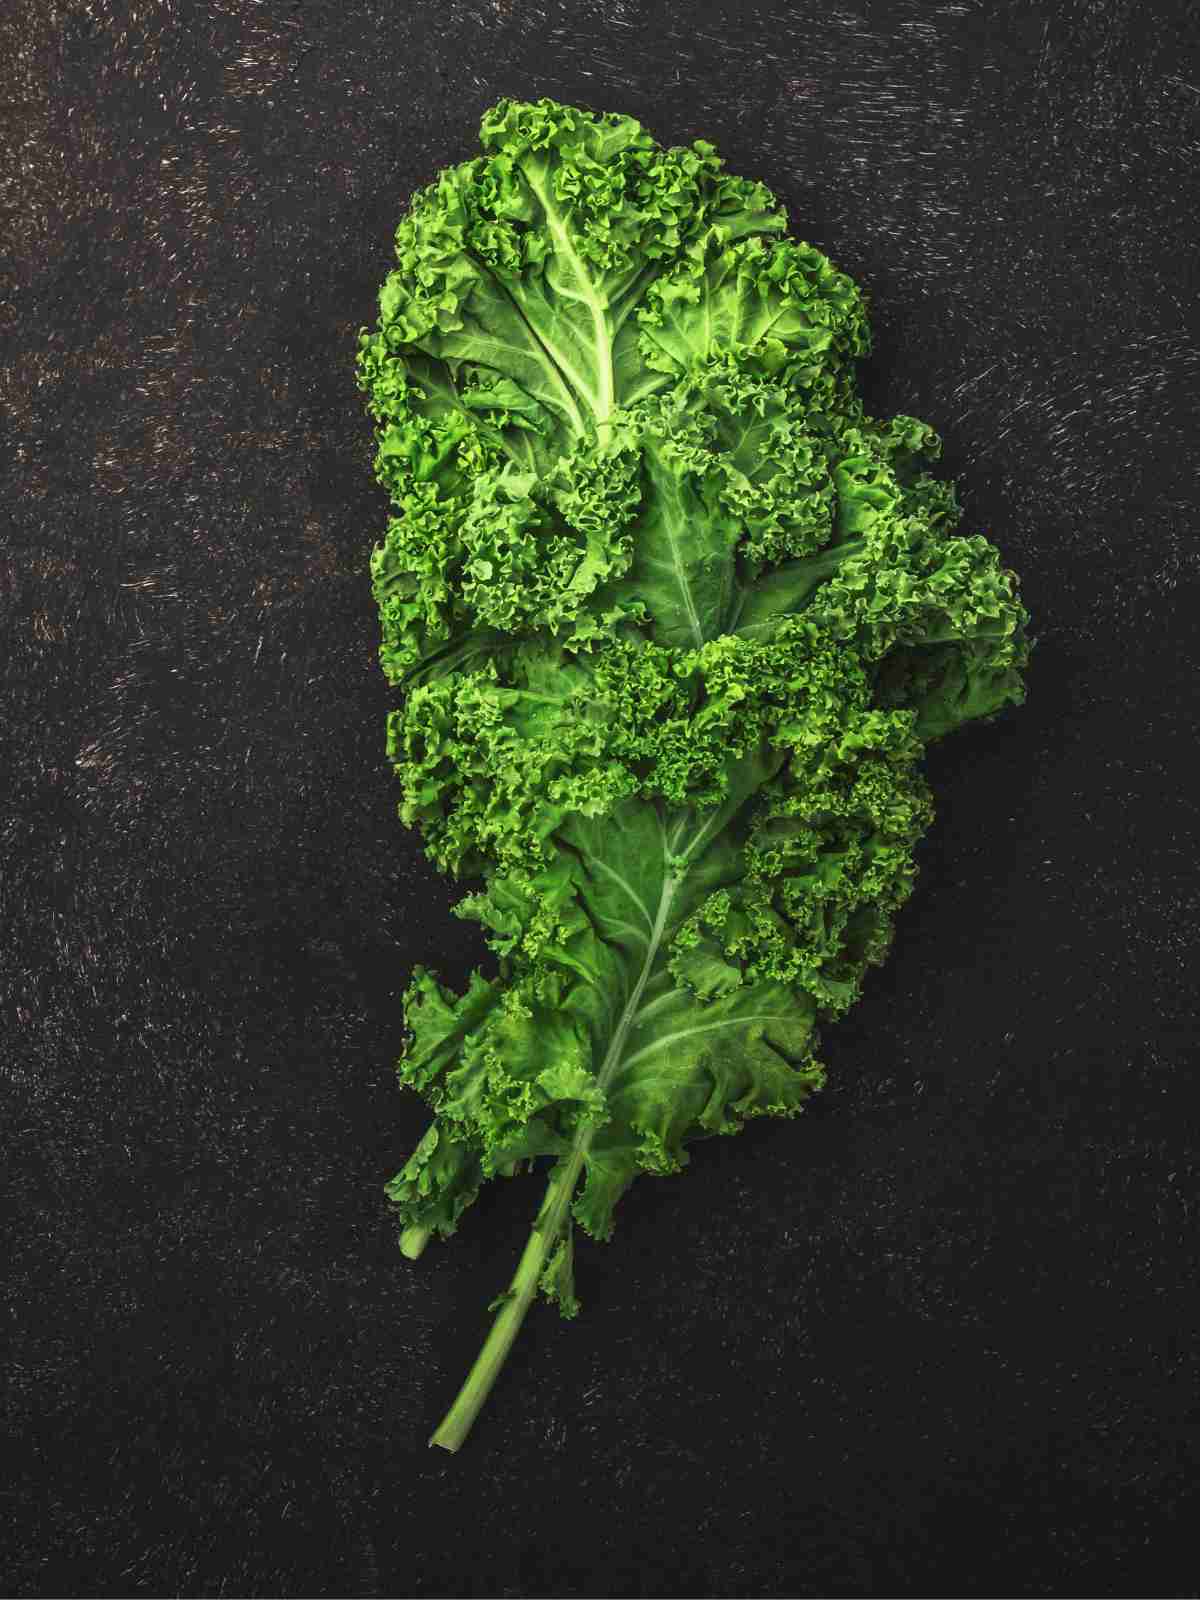 Can You Freeze Kale